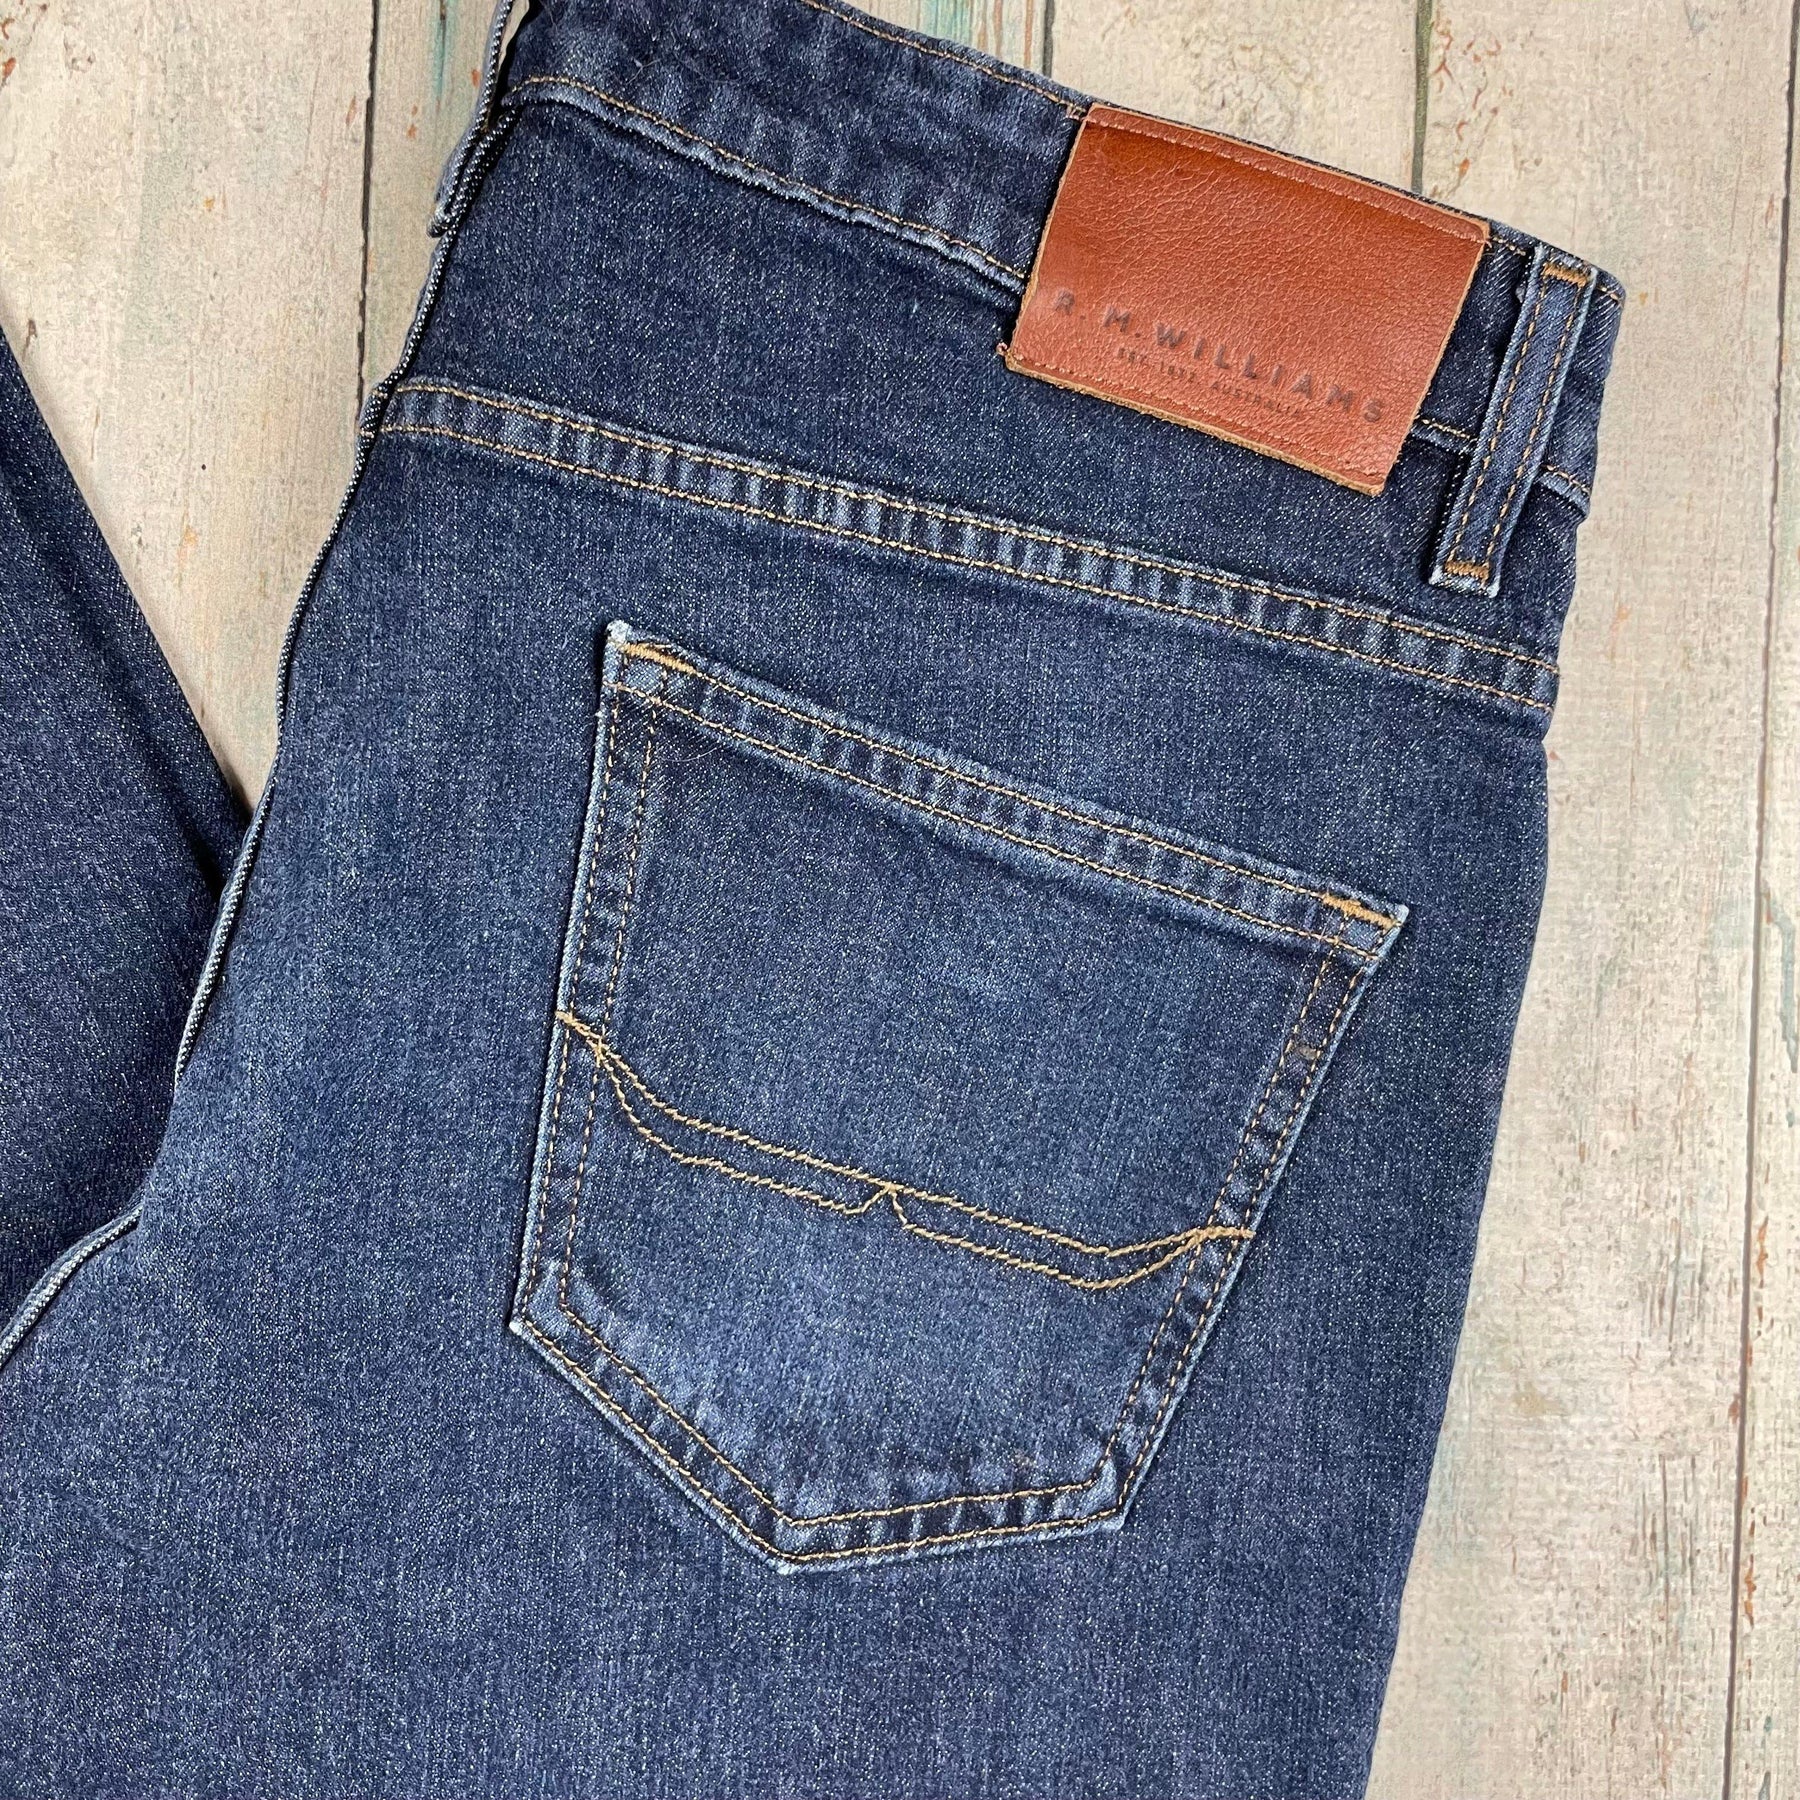 RM Williams Longhorn Jeans Pants Mens 34 R straight leg Denim Blue